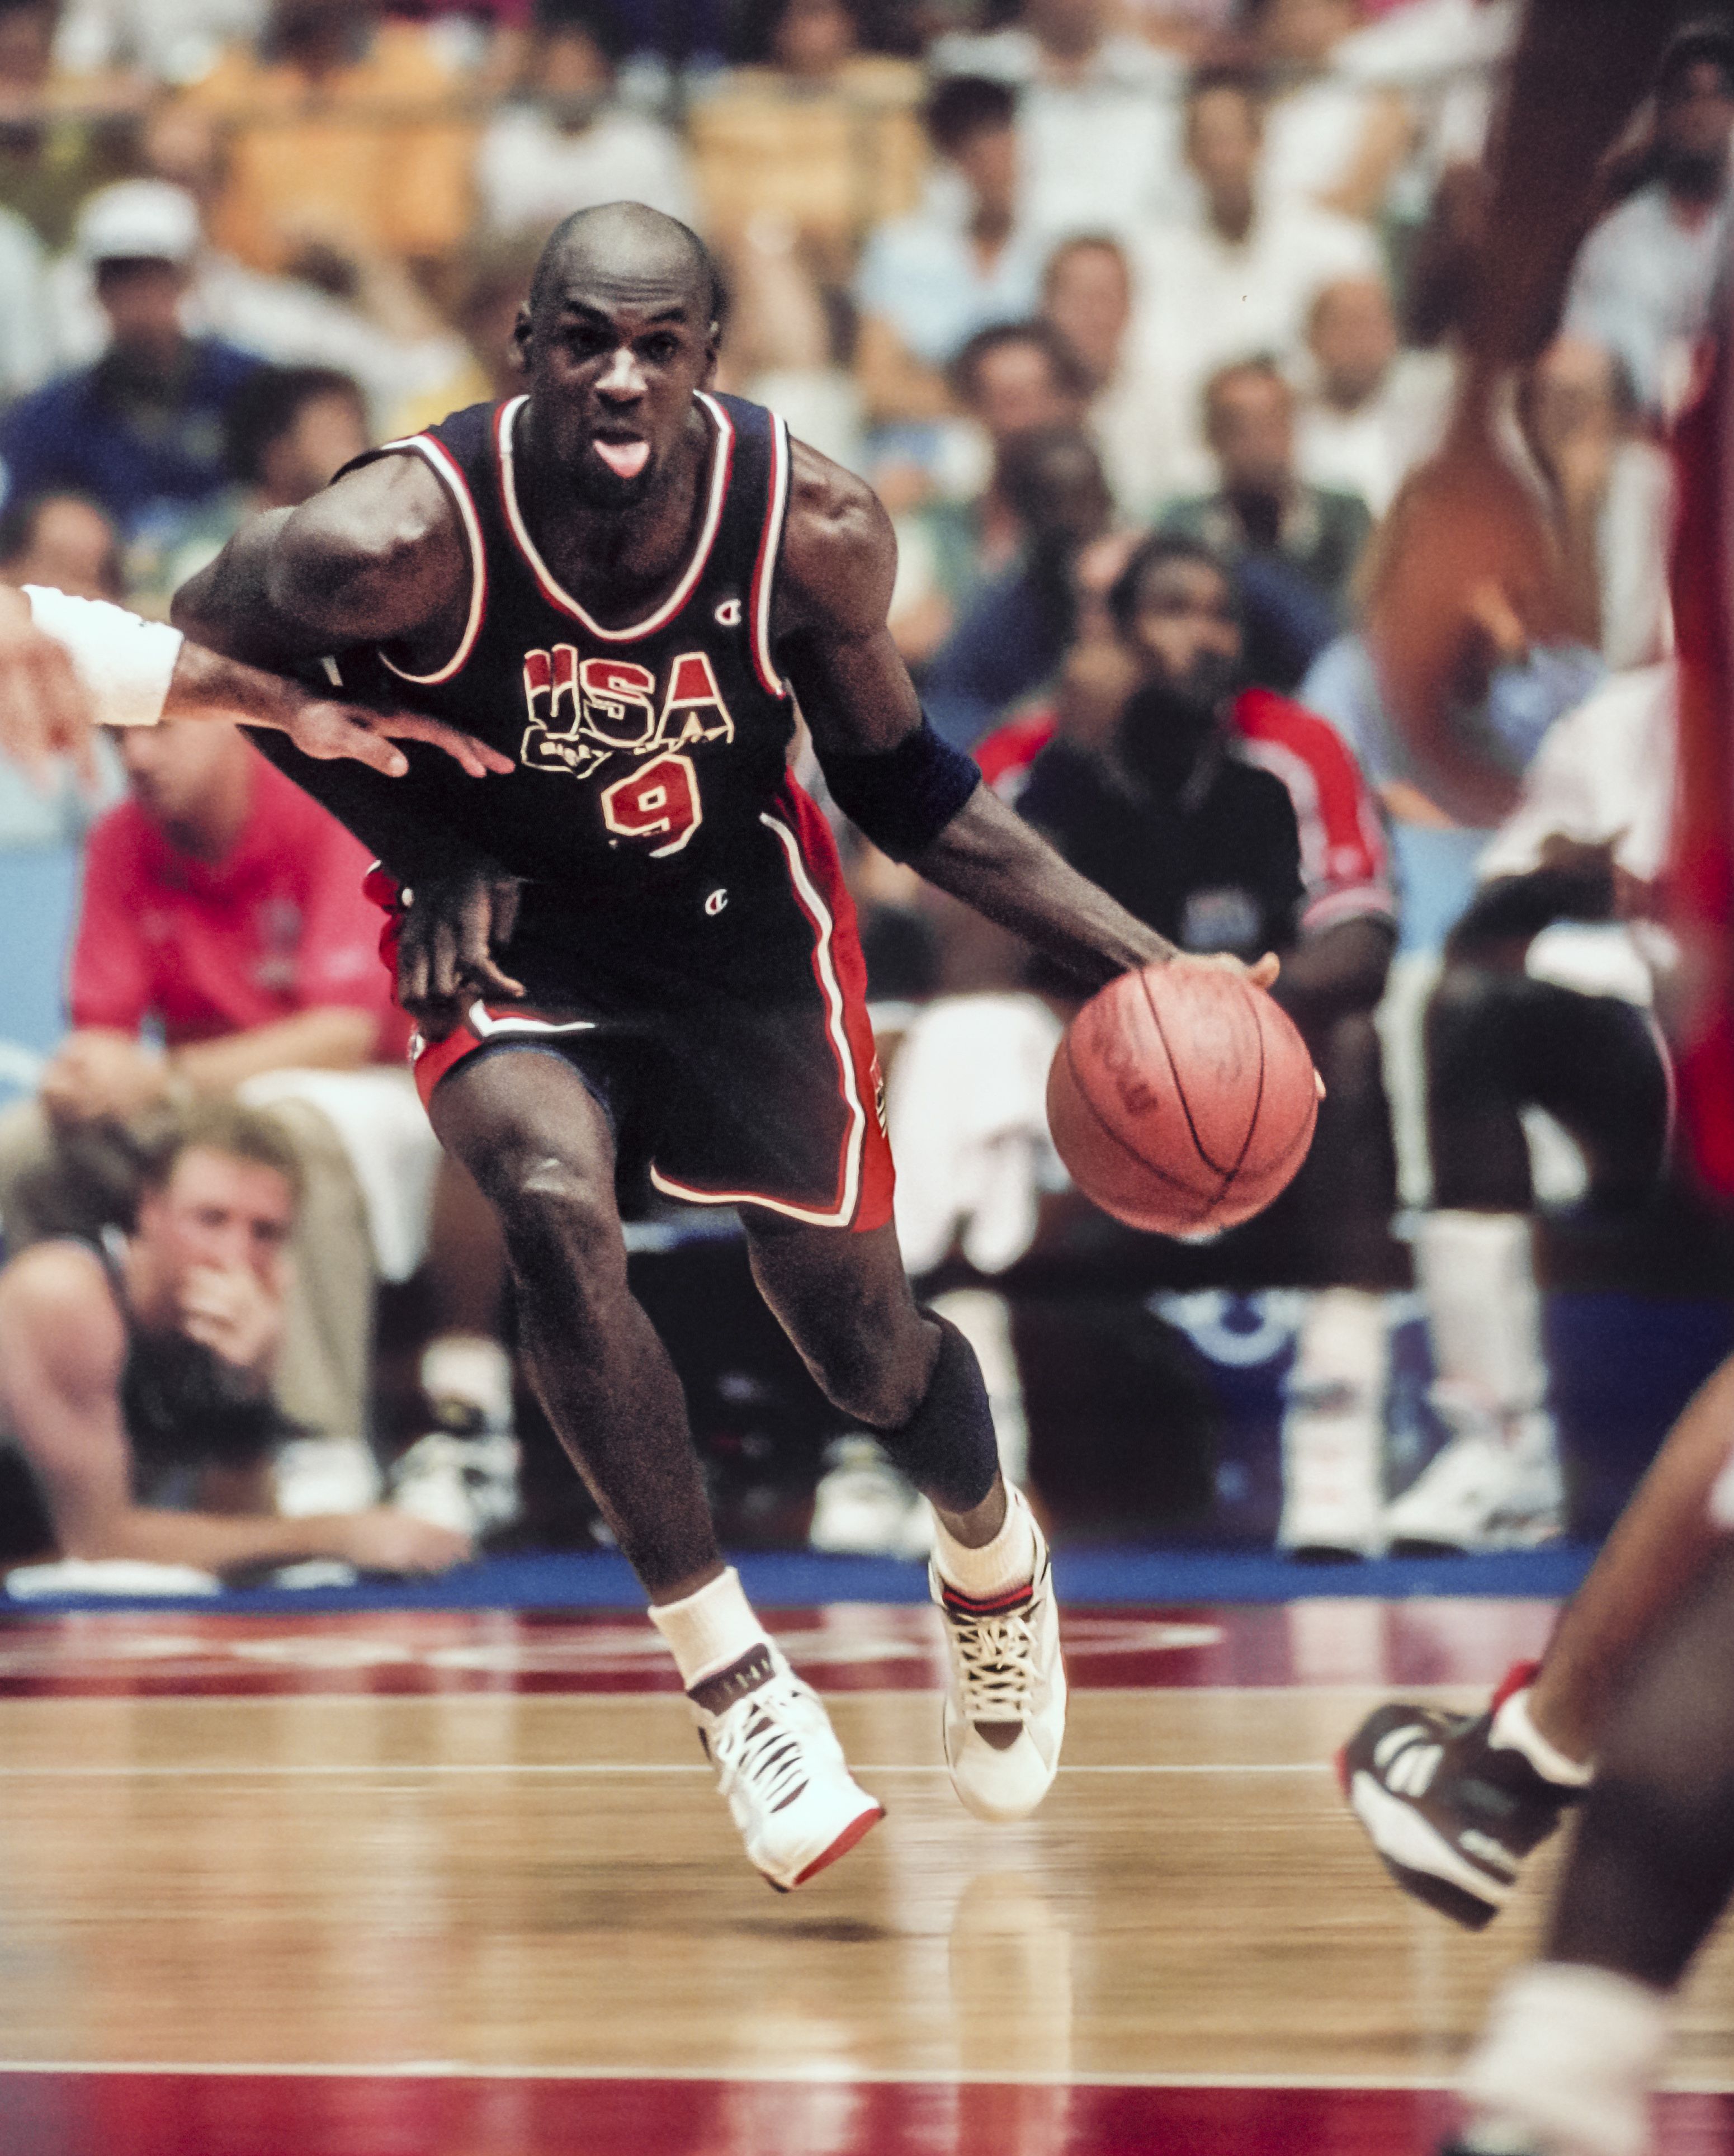 Michael Jordan Summer Olympics “Dream Team” Reebok Jacket Sotheby's Auction